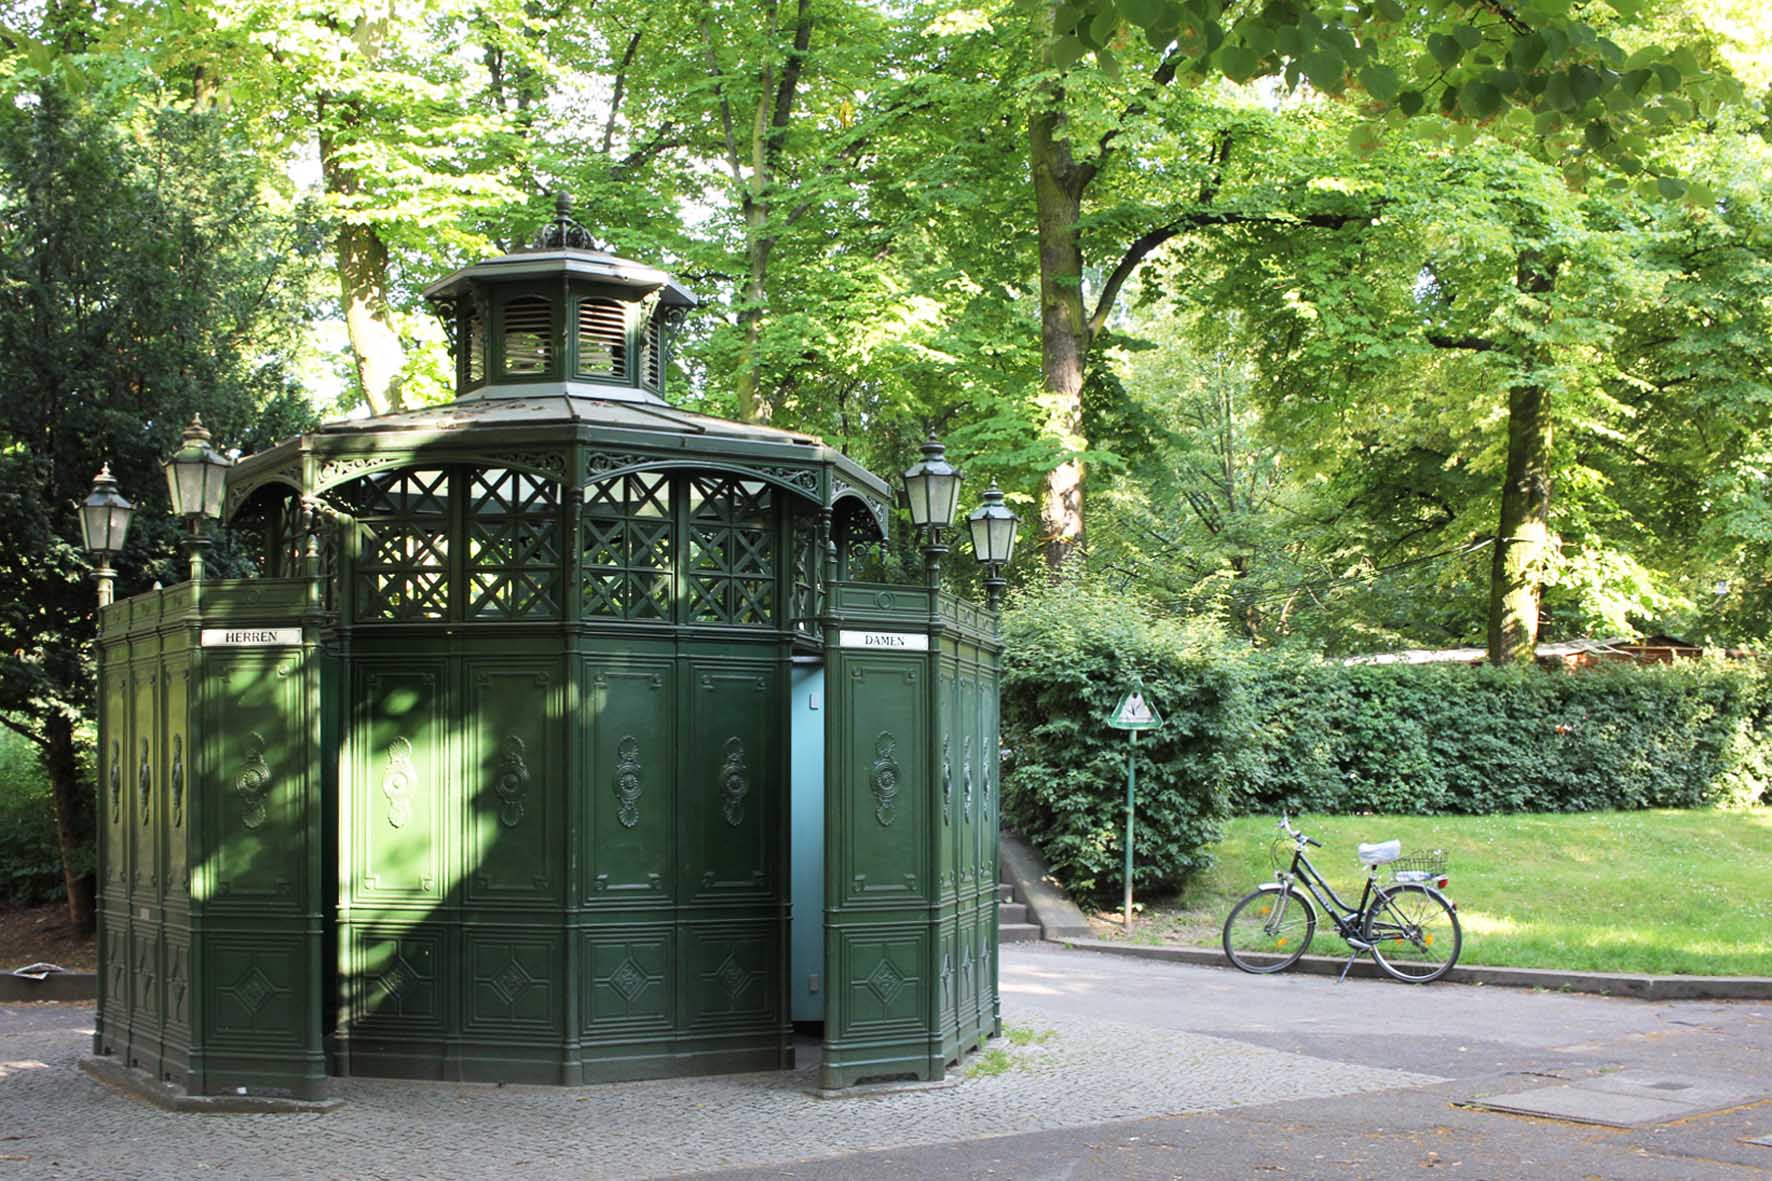 Café Achteck - Rüdesheimer Platz - an example of Berlin's classic 19th century green cast iron public toilets